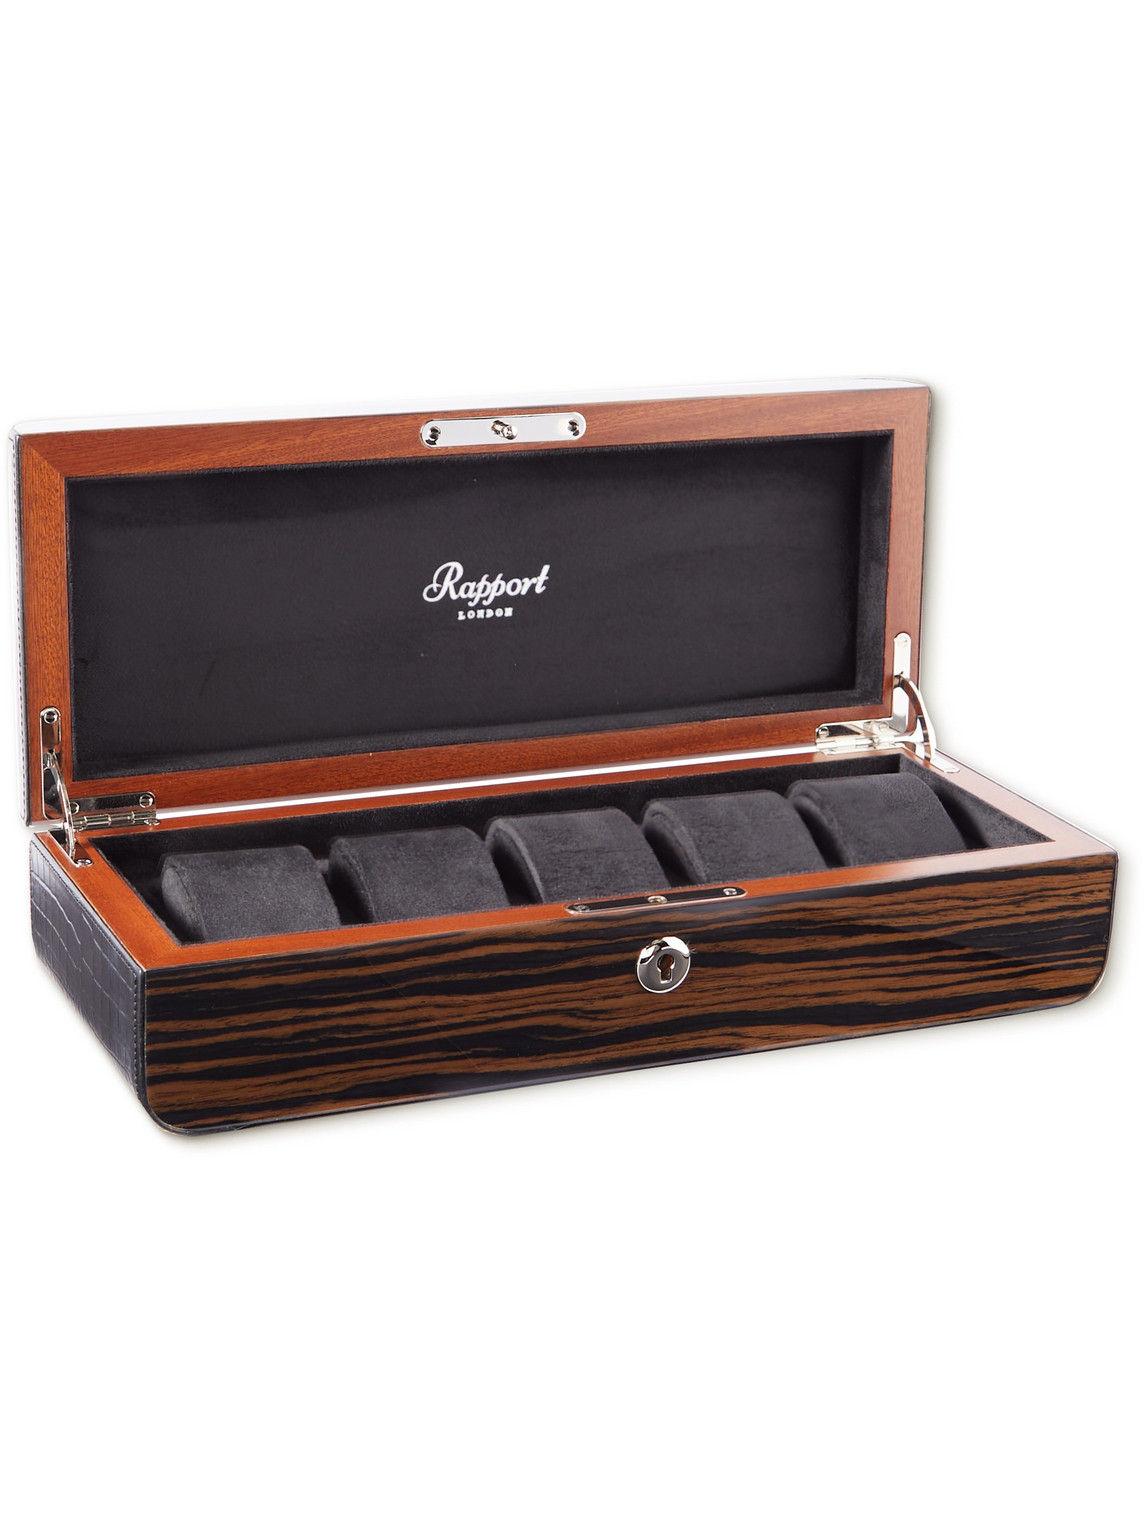 Rapport London Mayfair Wood 5-piece Watch Box In Brown